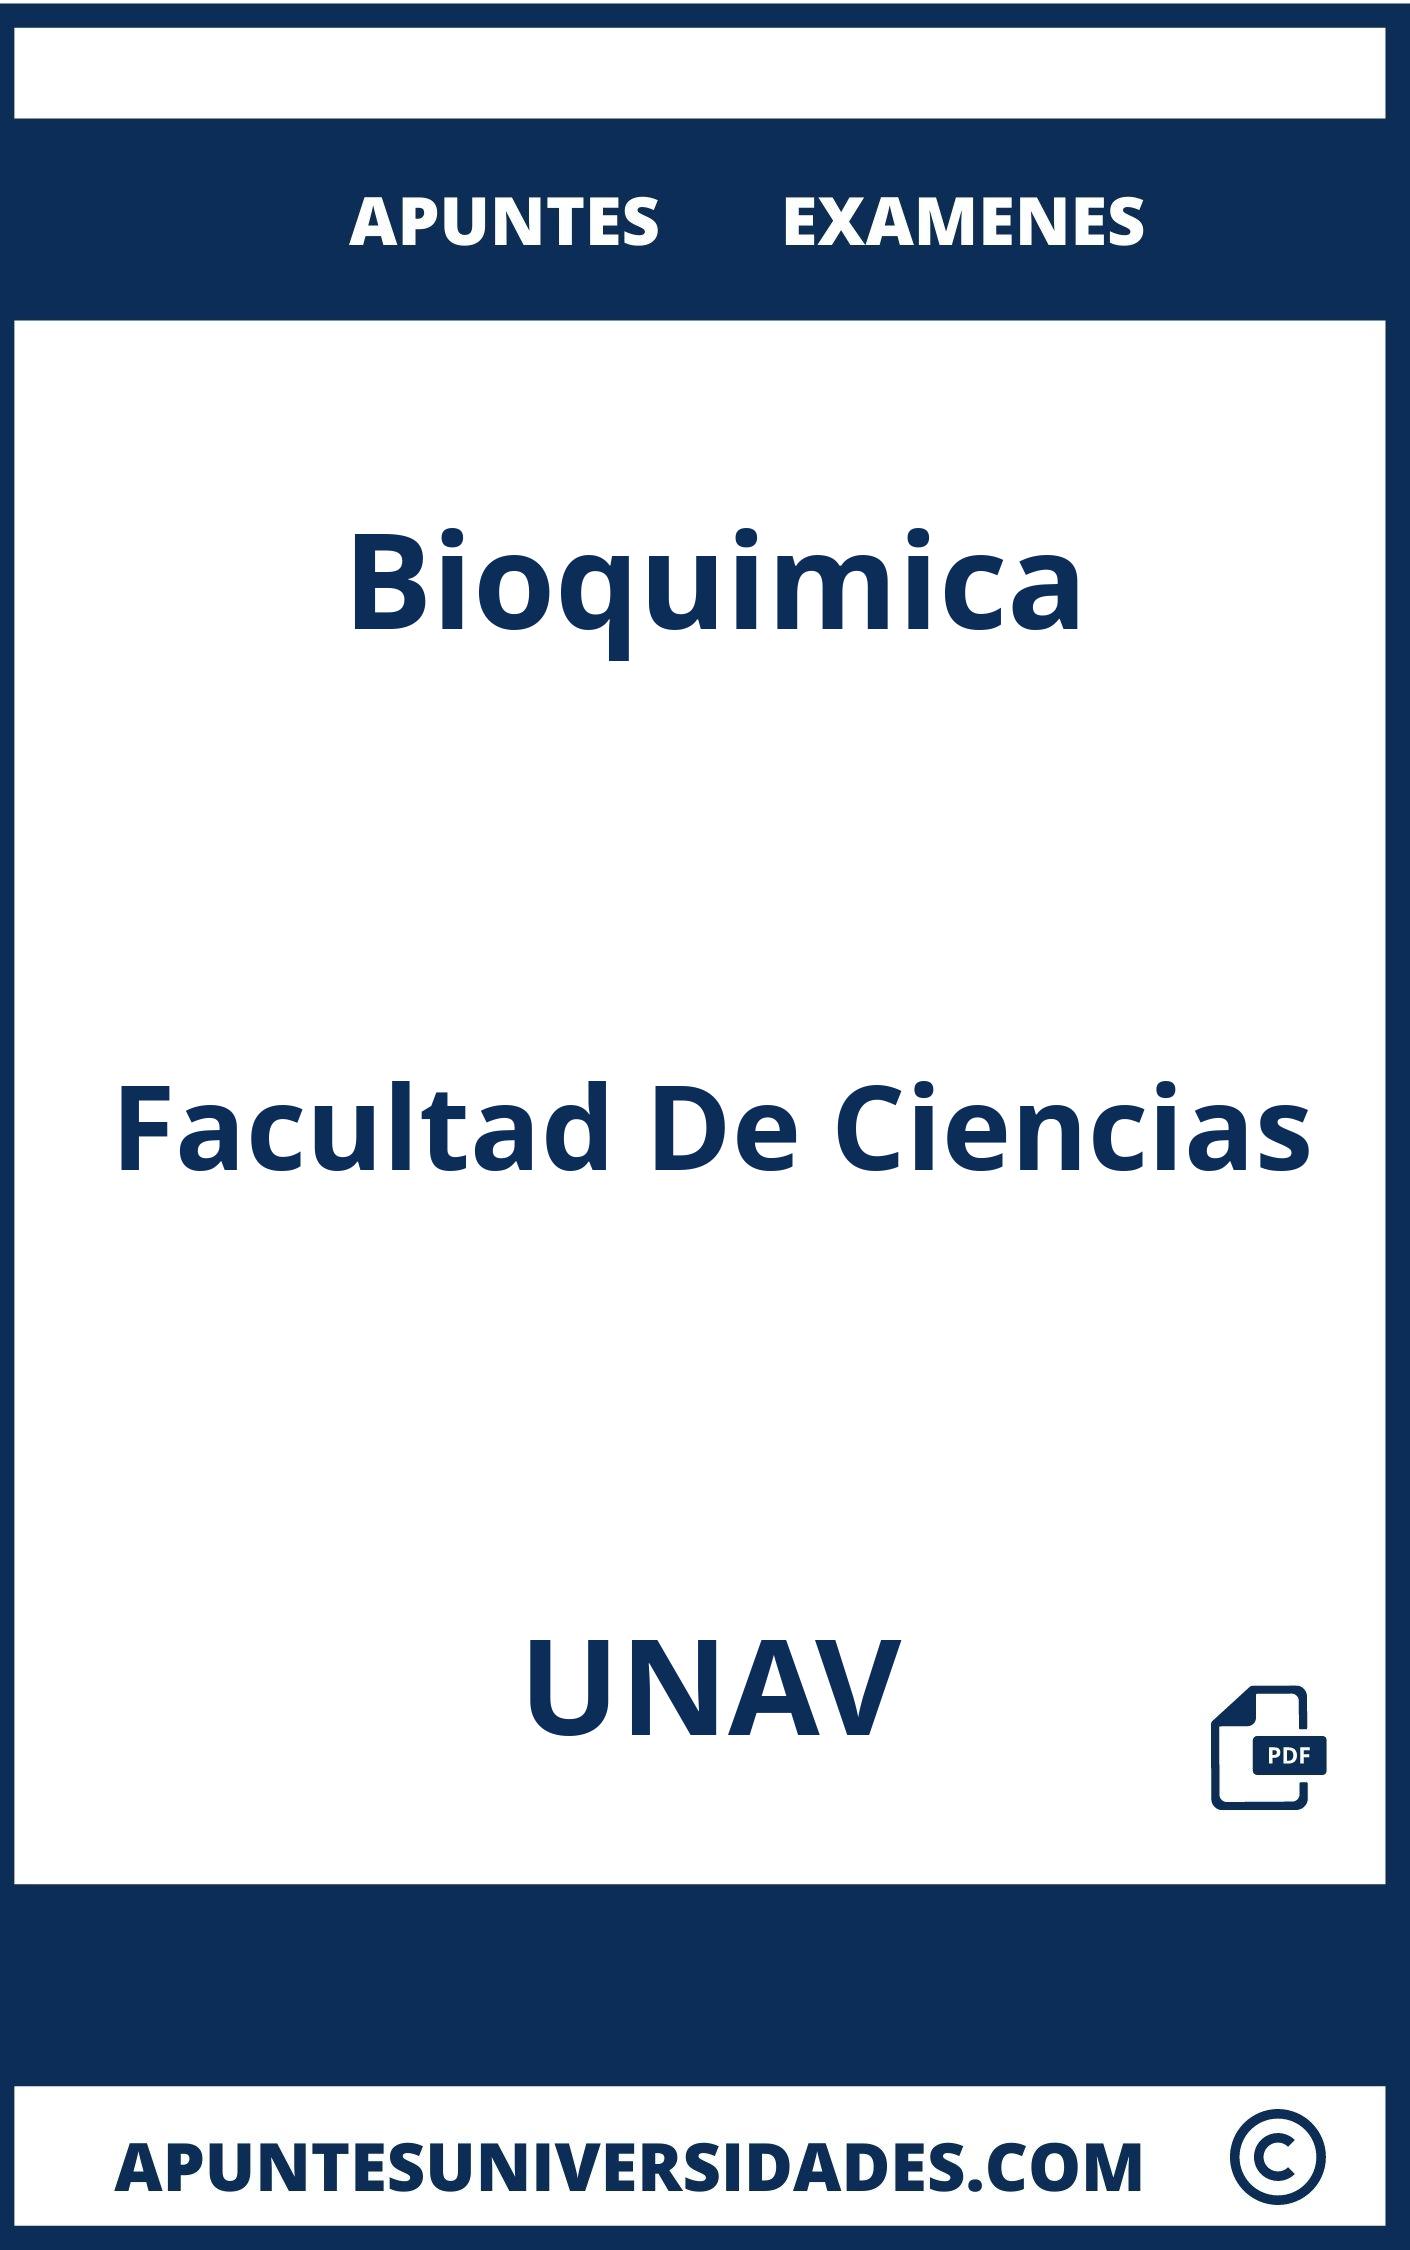 Bioquimica UNAV Examenes Apuntes